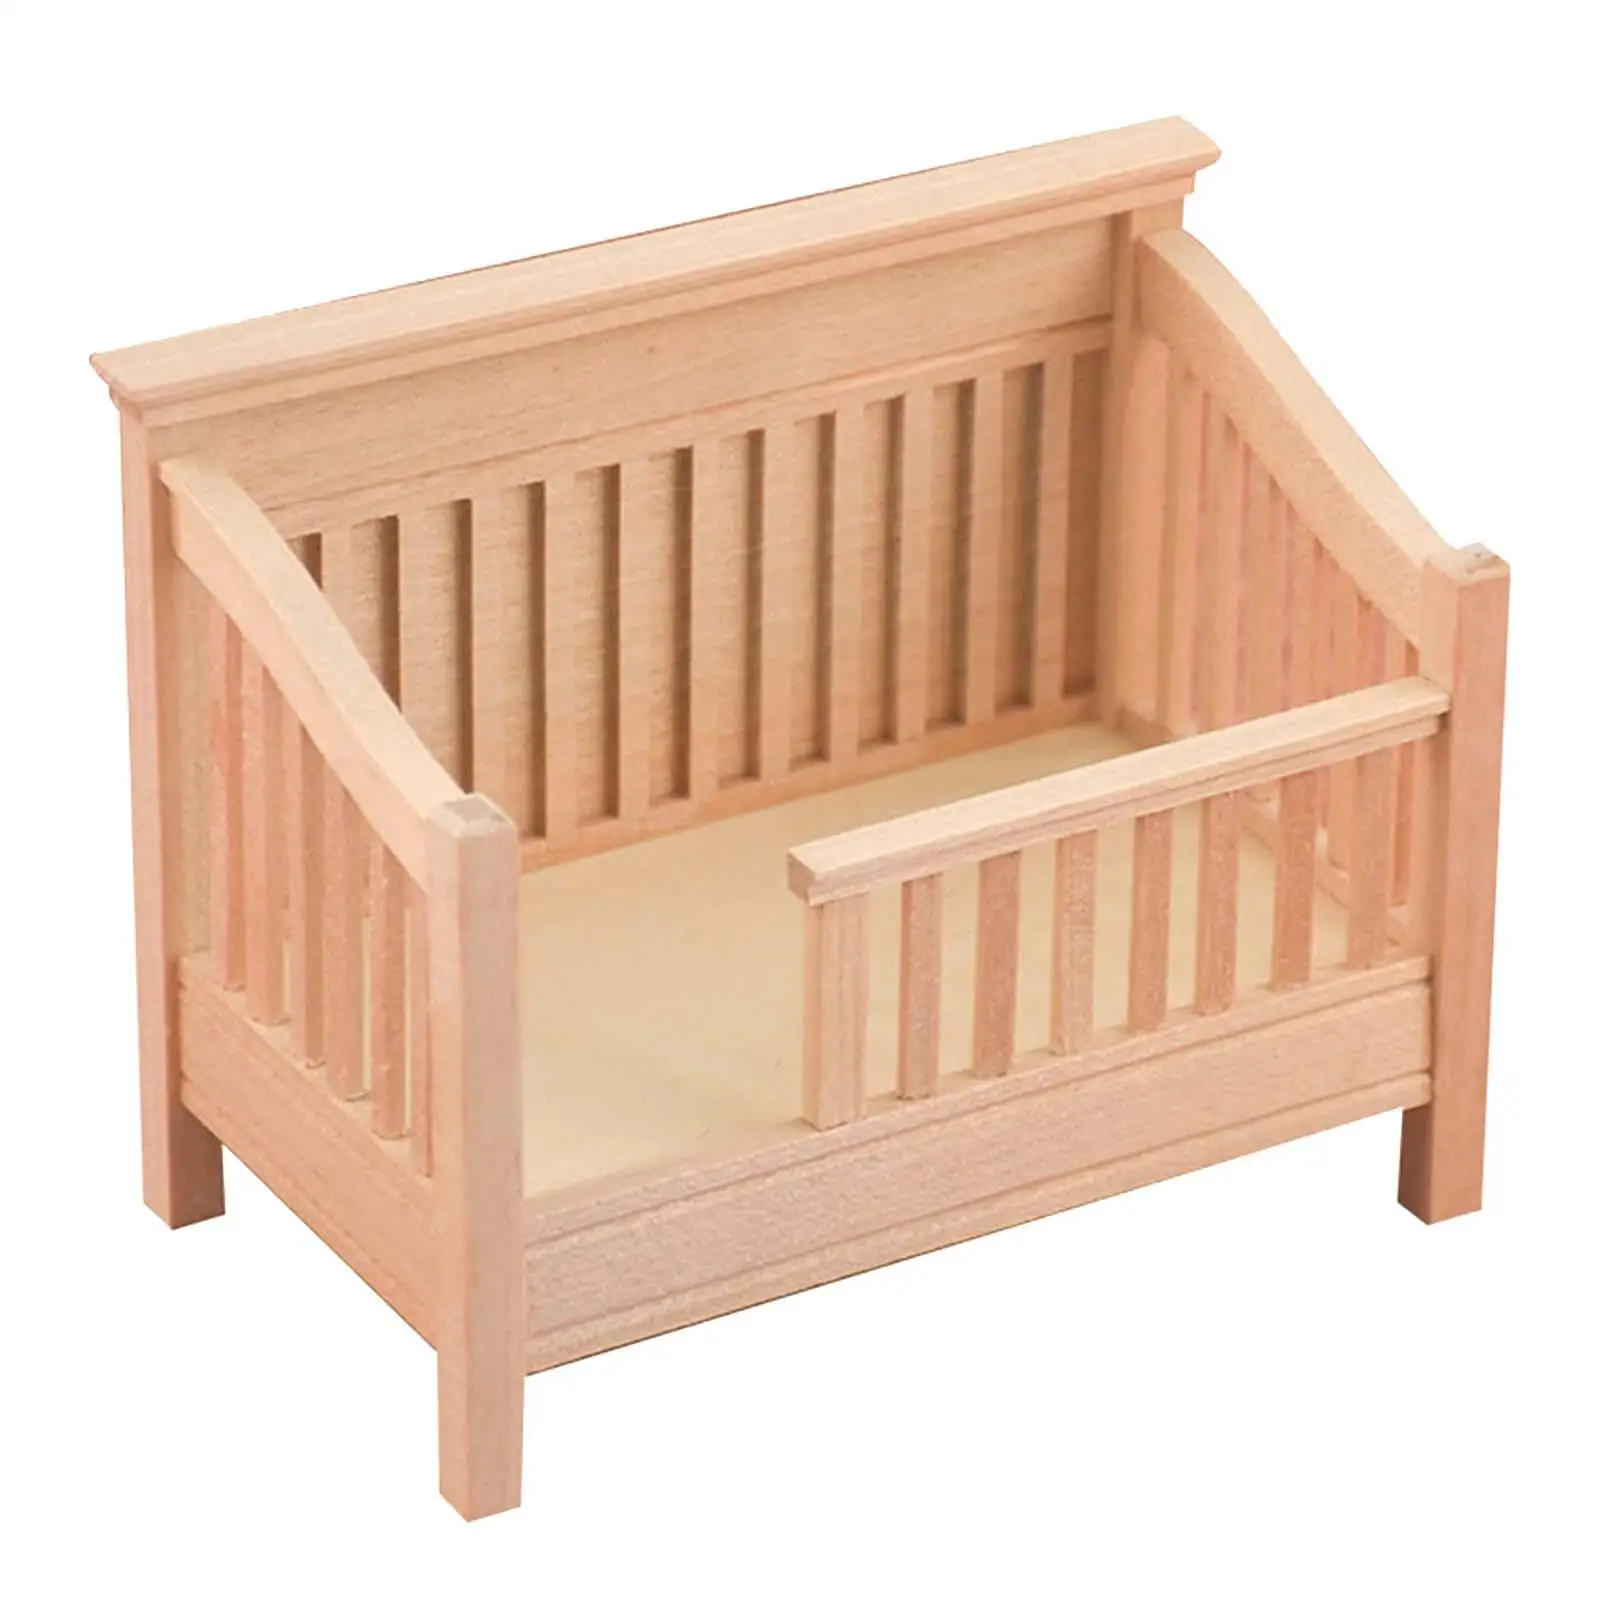 1/12 Scale Dollhouse Crib Mini Furniture Baby Doll Cradle Bed Unpainted Pretend Play for Bedroom Decor Accessory Diorama